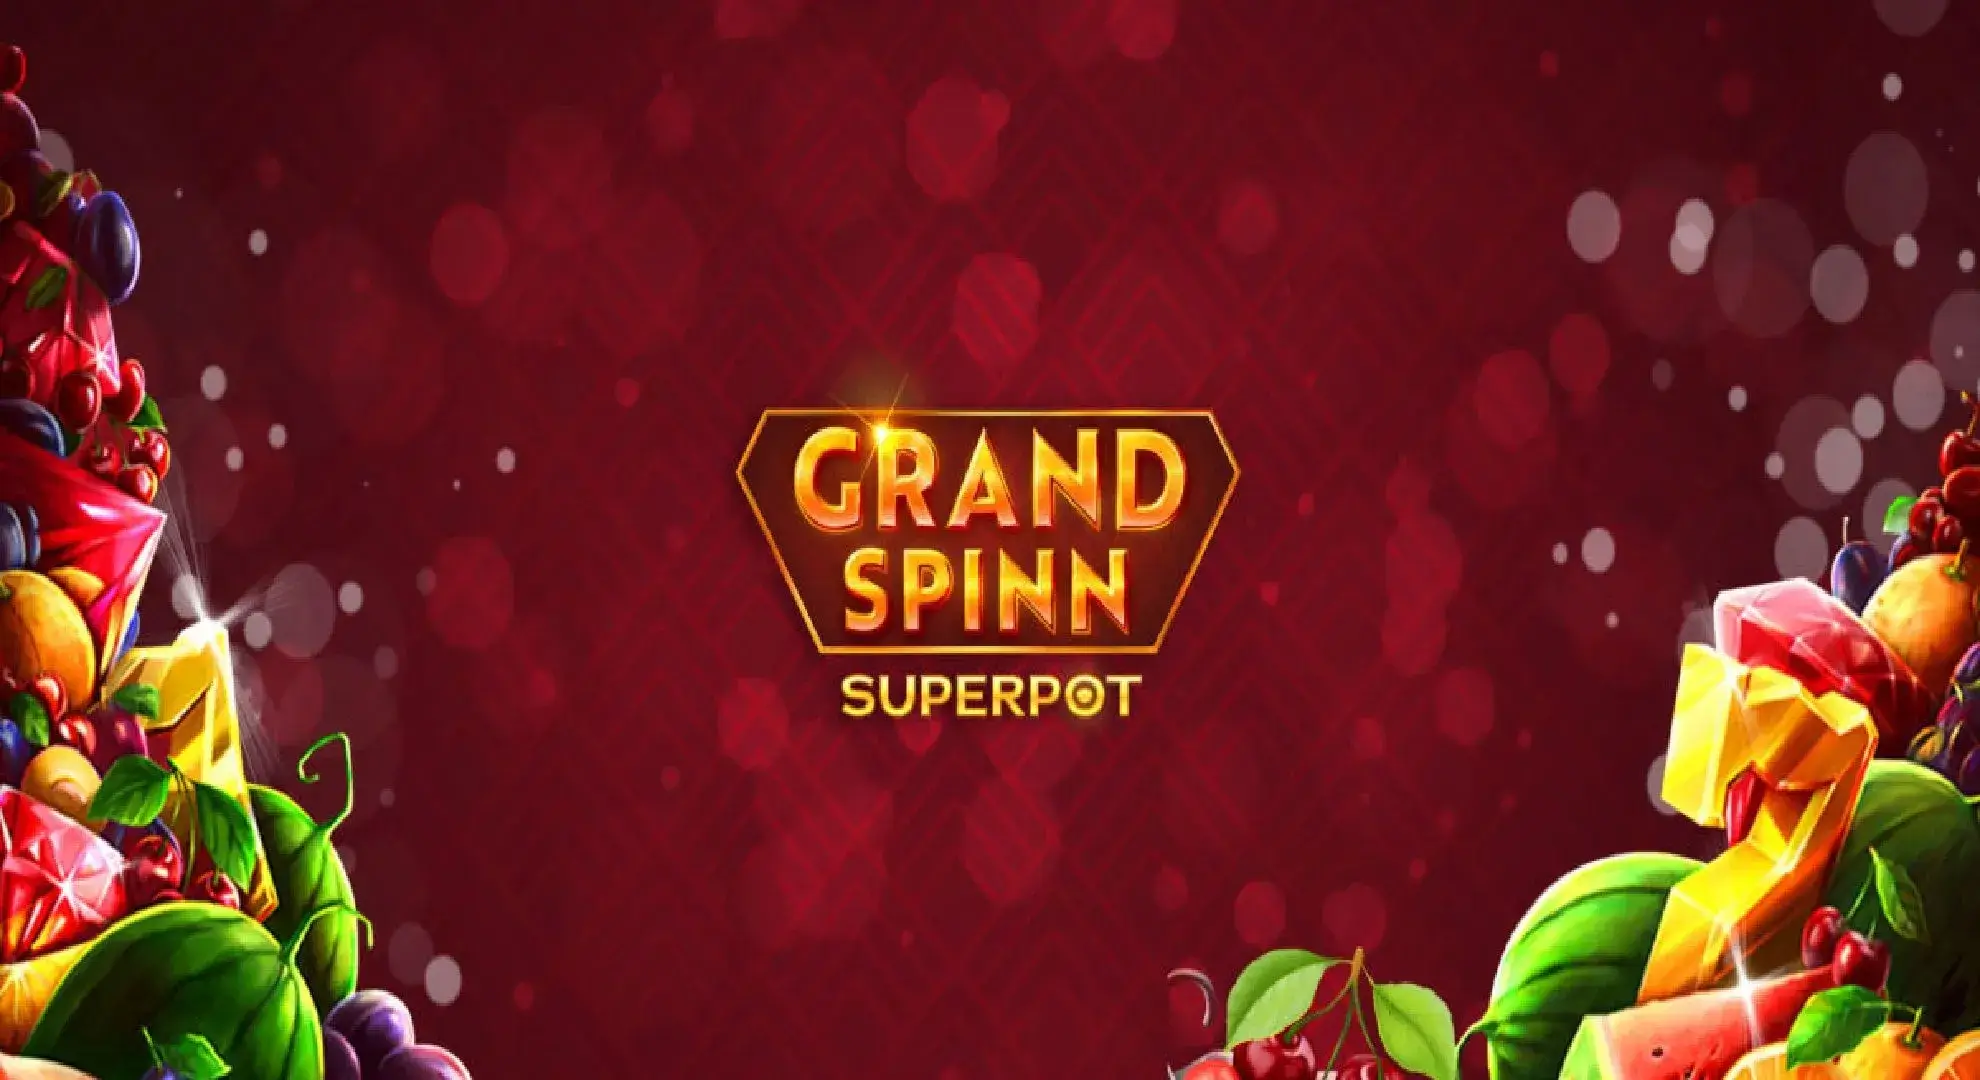 Grand spinn superspot